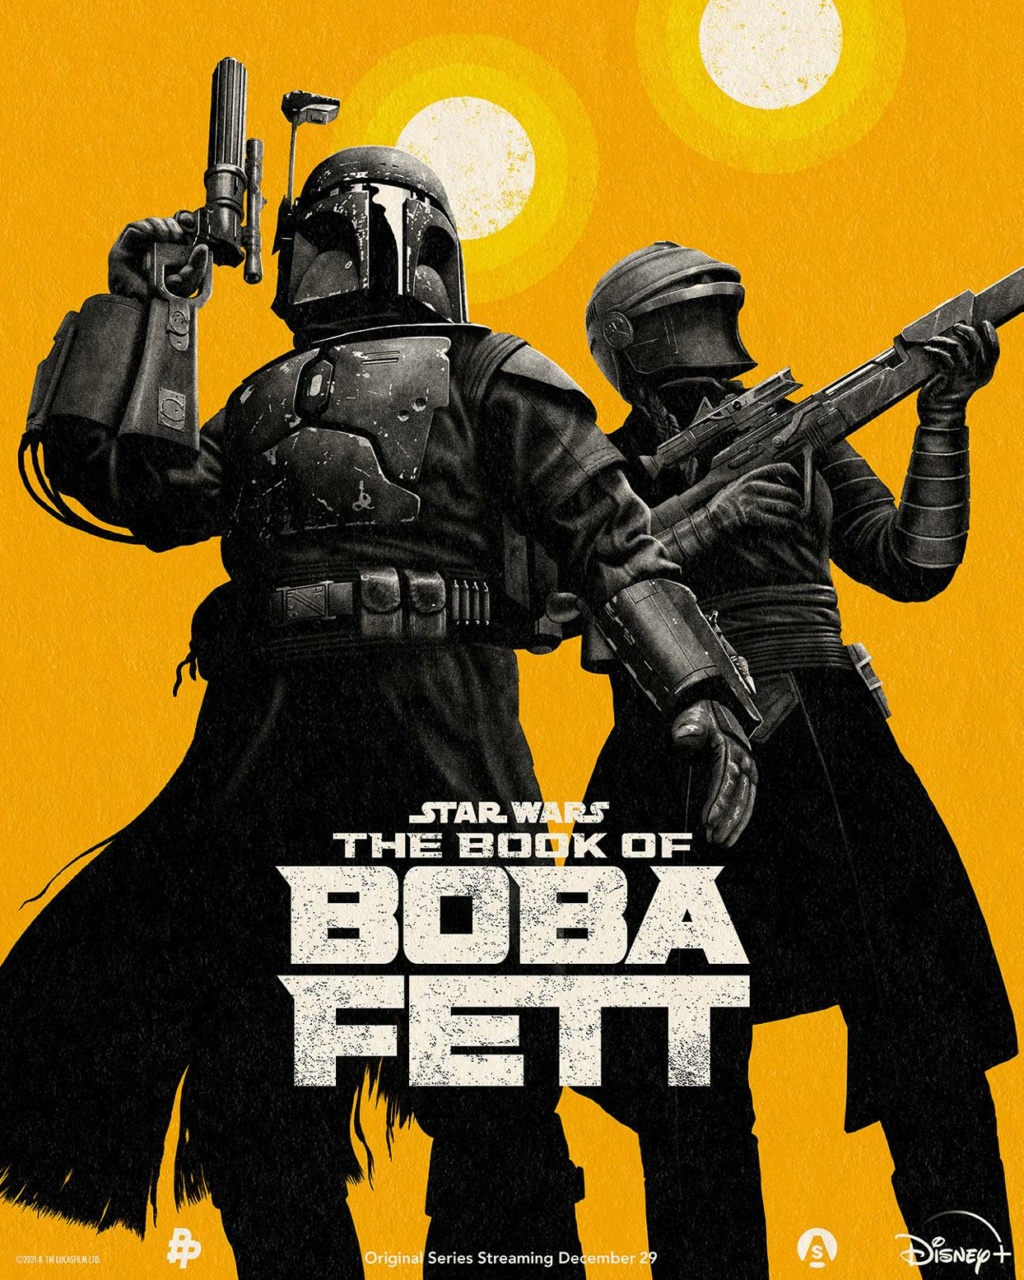 Star Wars Le Livre de Boba Fett - Les Artworks promo Poste138